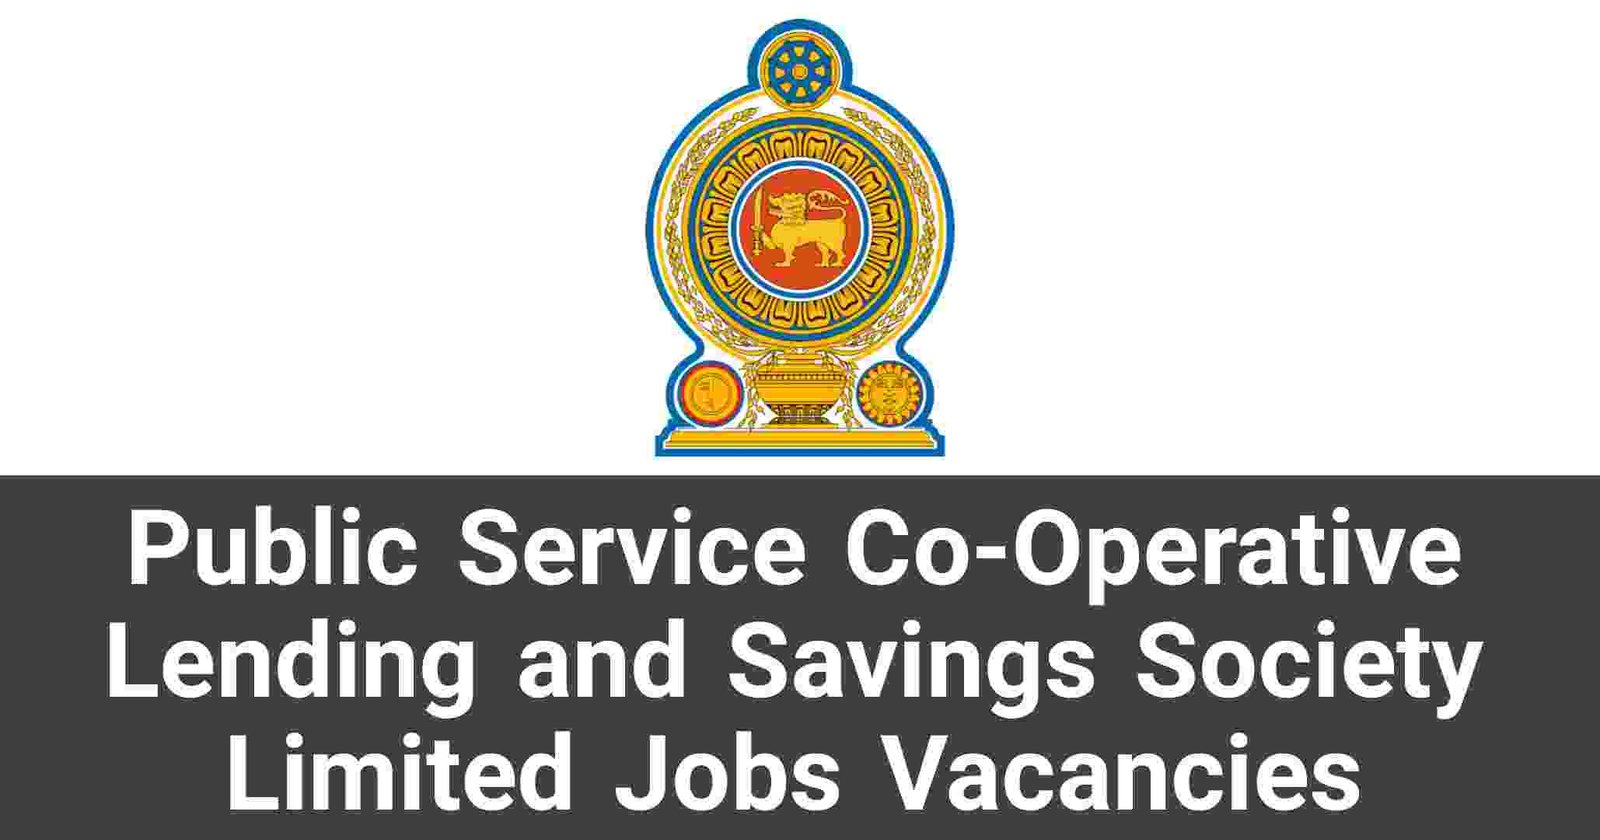 Public Service Co-Operative Lending and Savings Society Limited Jobs Vacancies